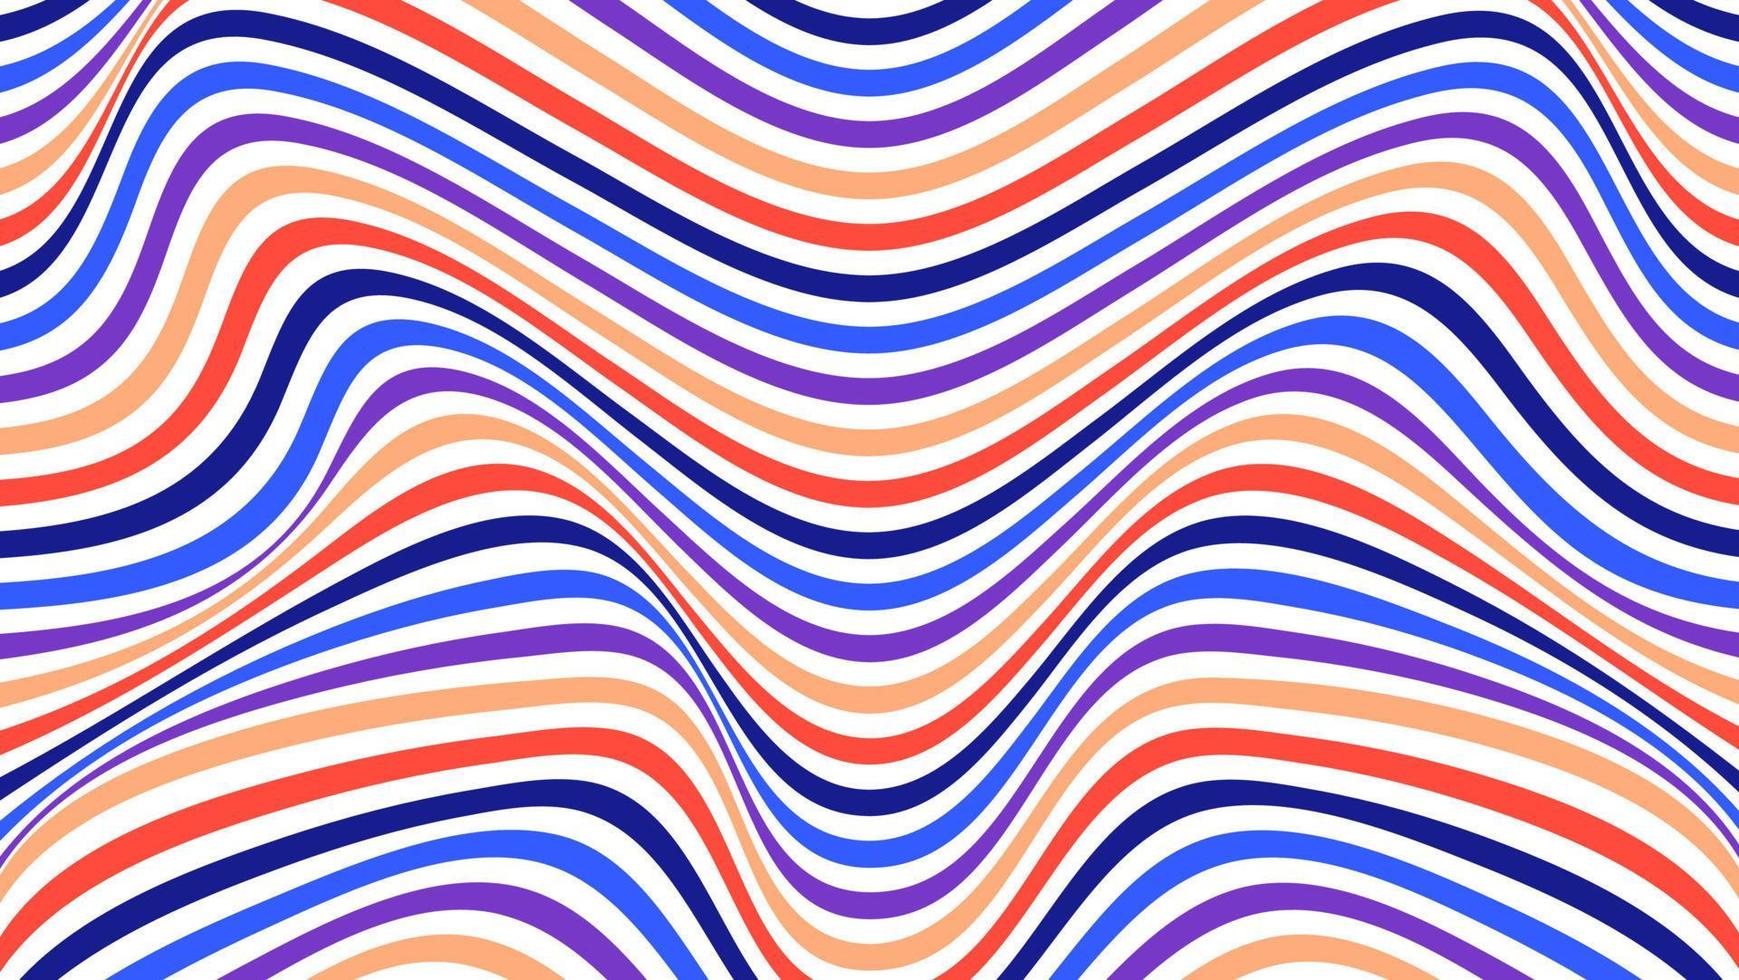 fondo de ilusión óptica psicodélica colorida vector